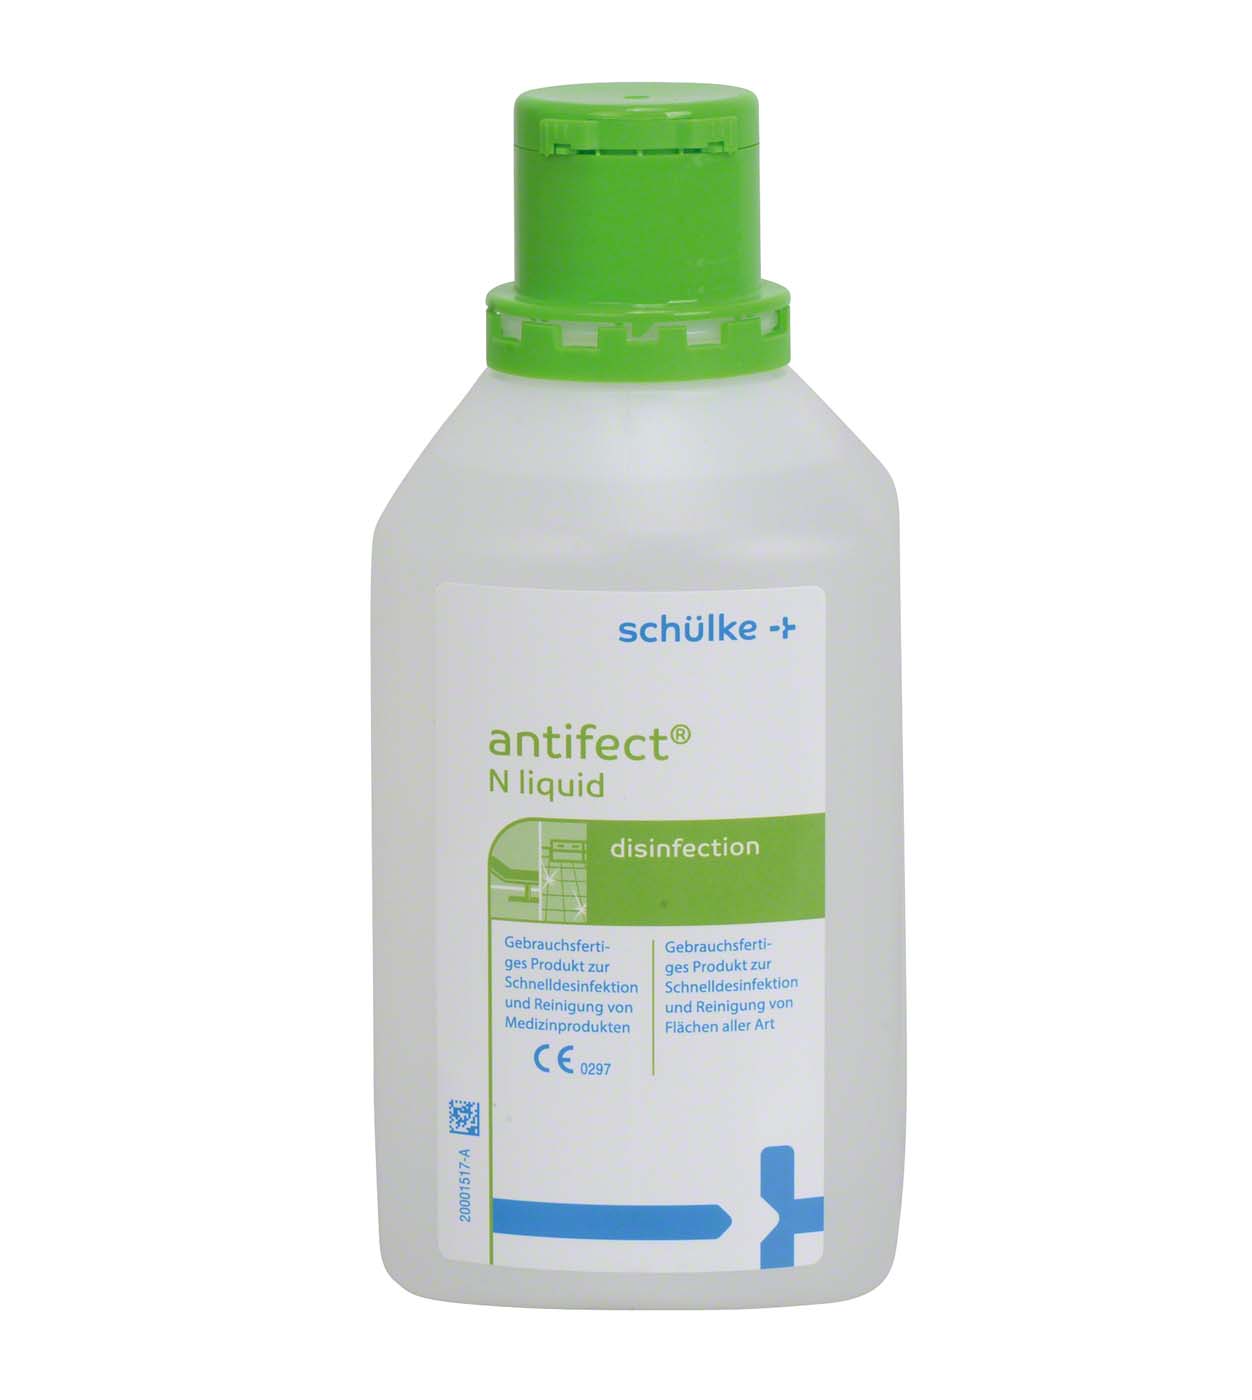 antifect® N liquid schülke